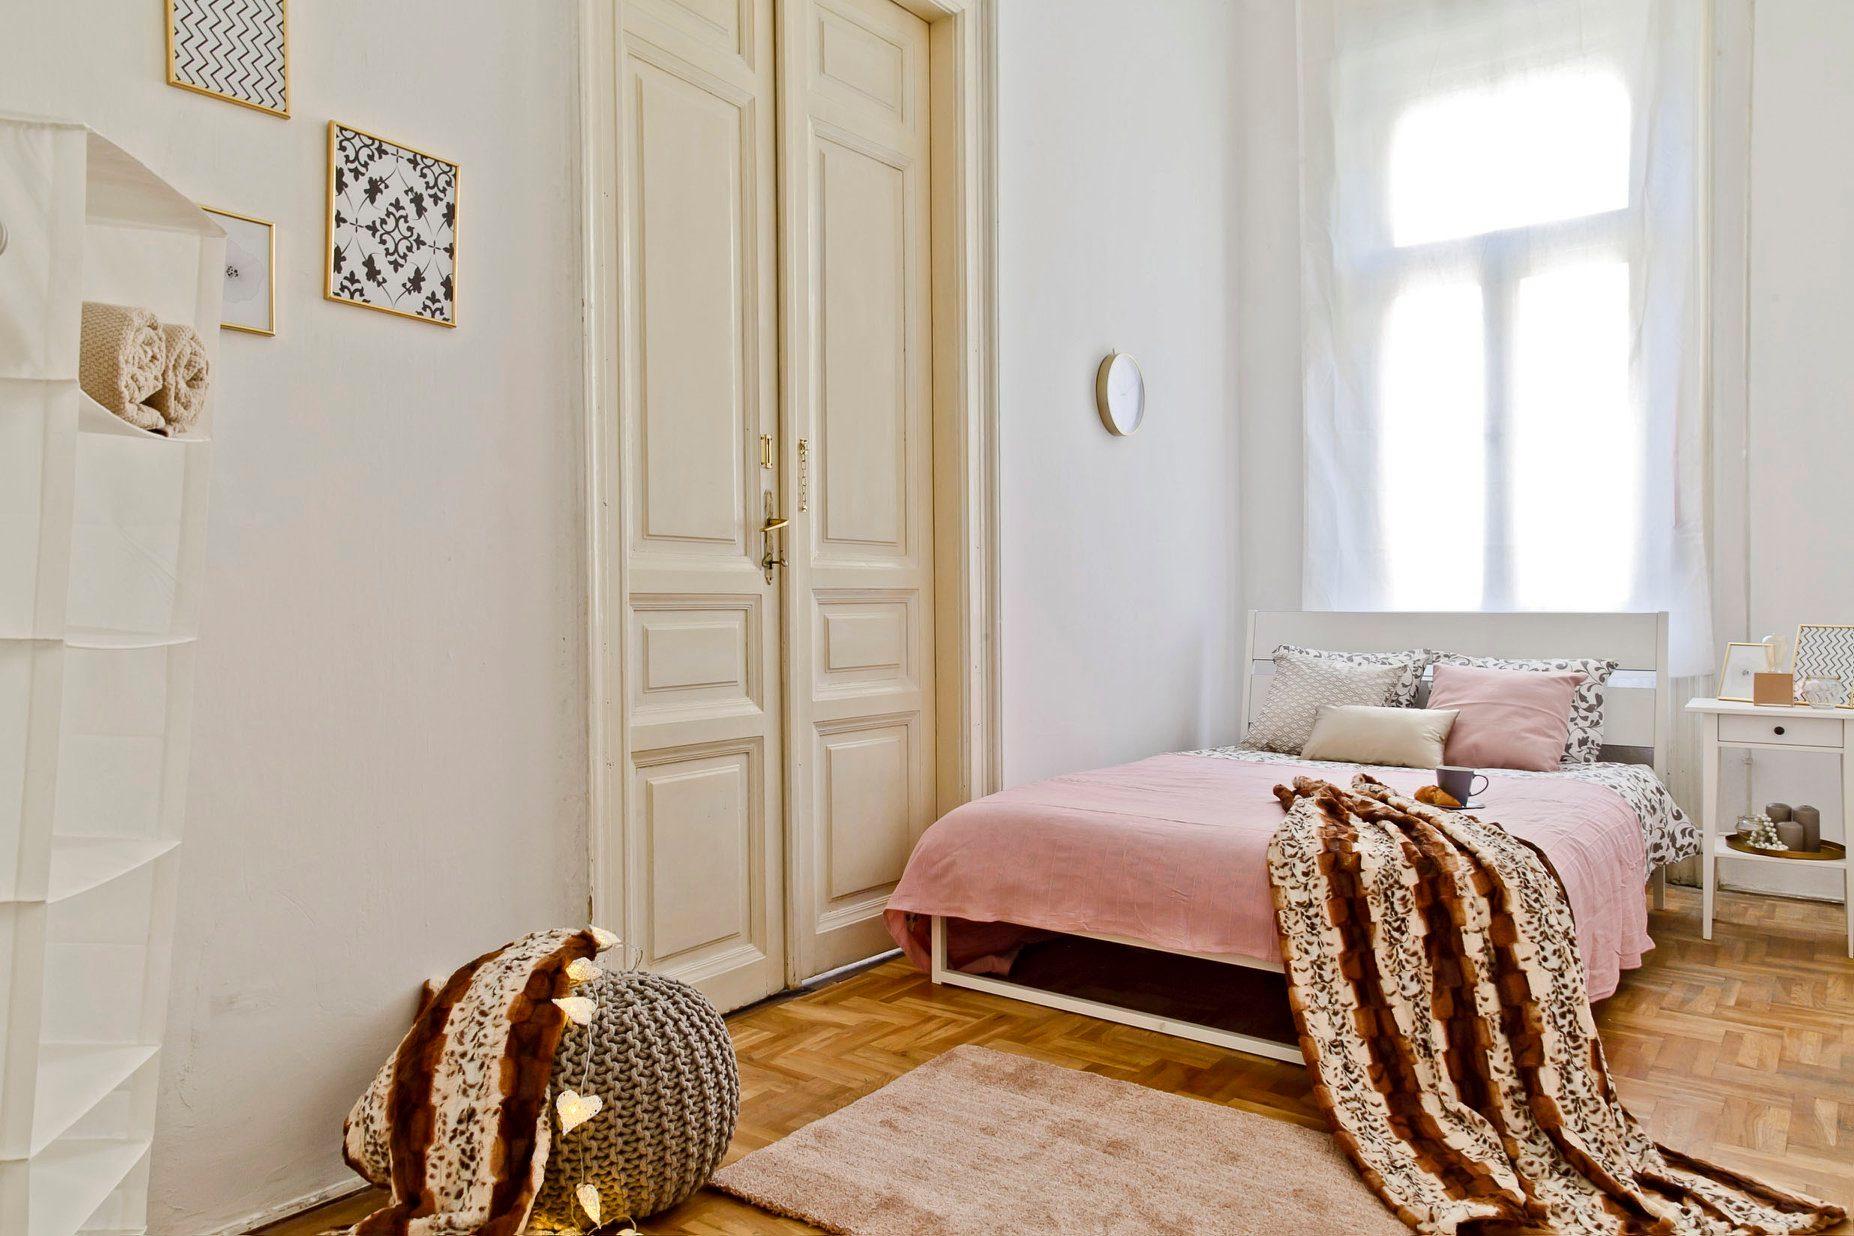 Rakoczi 2 - Private bedroom flat Budapest